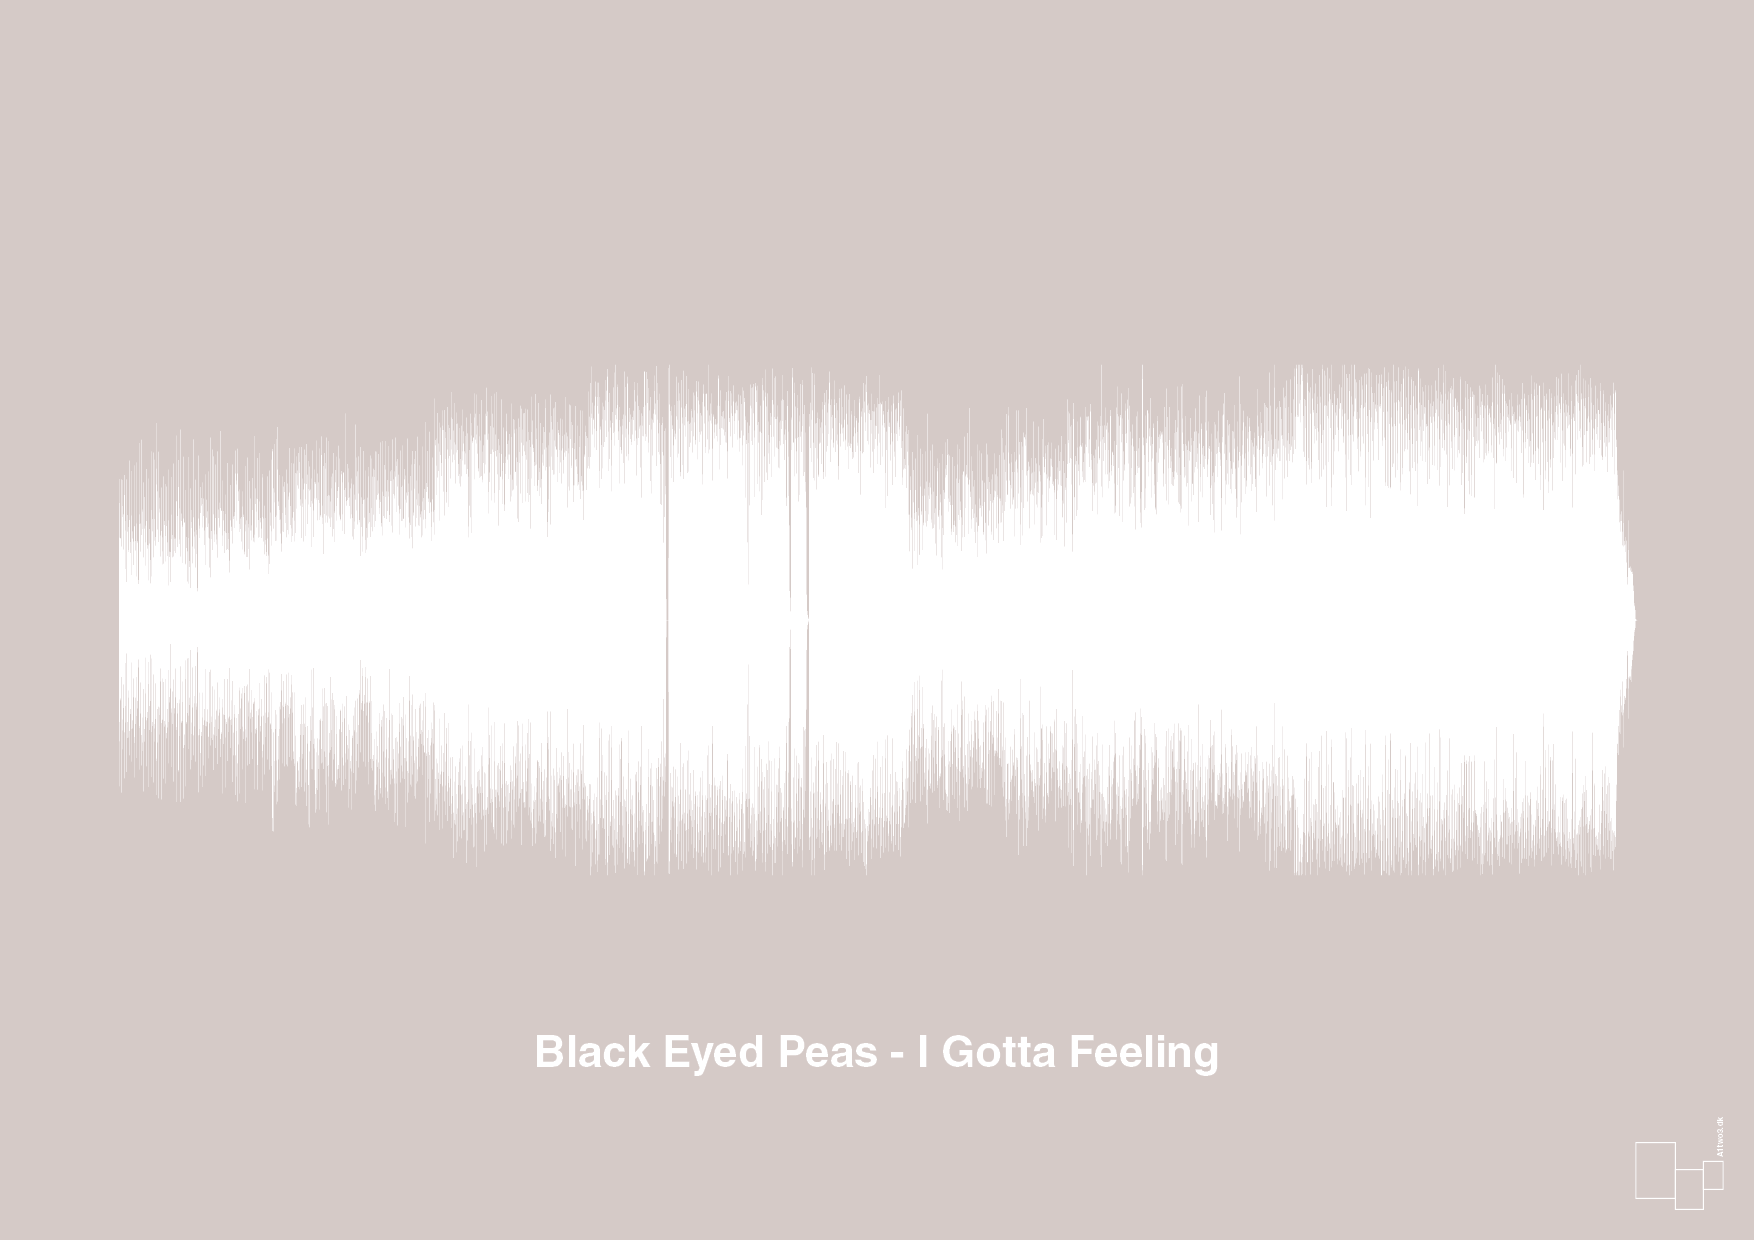 black eyed peas - i gotta feeling - Plakat med Musik i Broken Beige